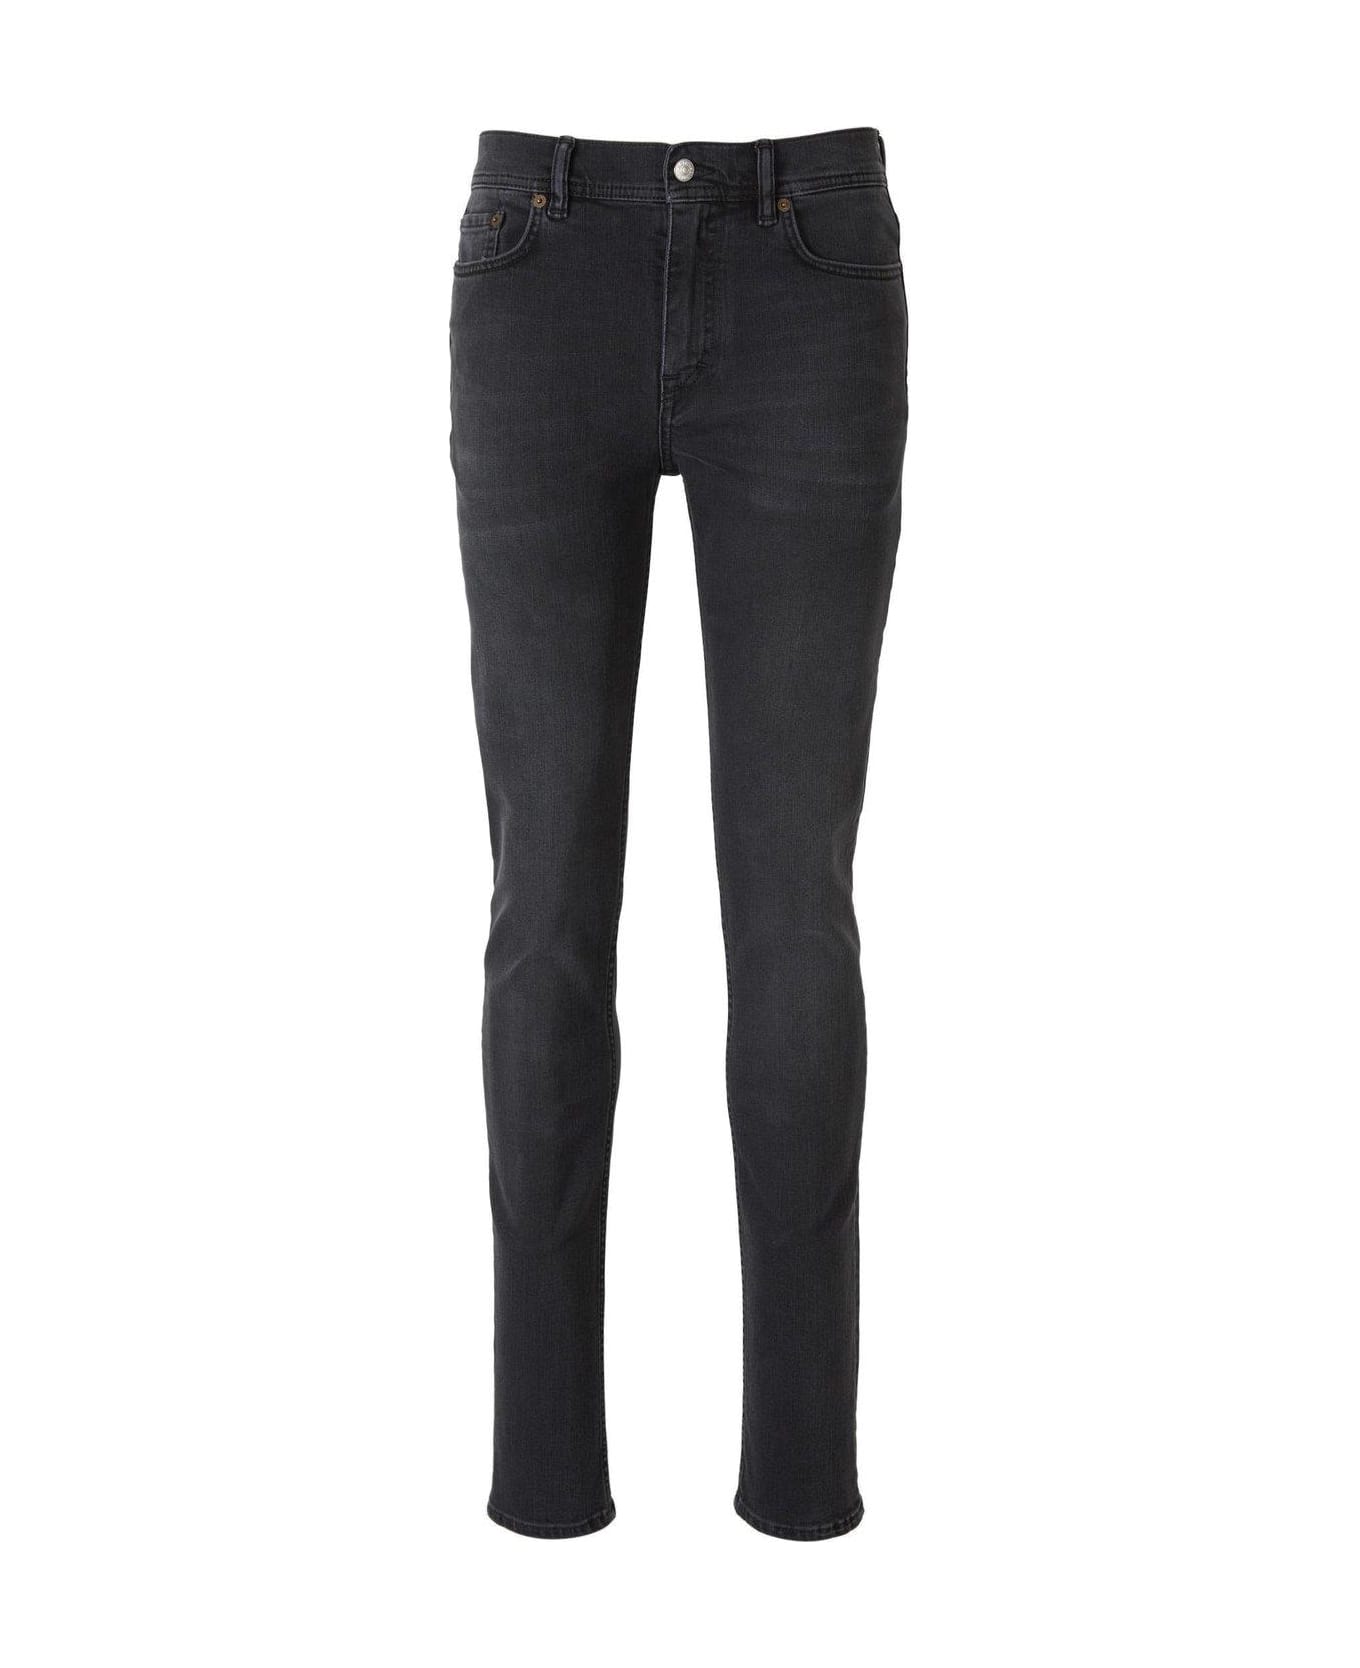 Acne Studios North Mid-rise Skinny-fit Jeans - Used Black デニム